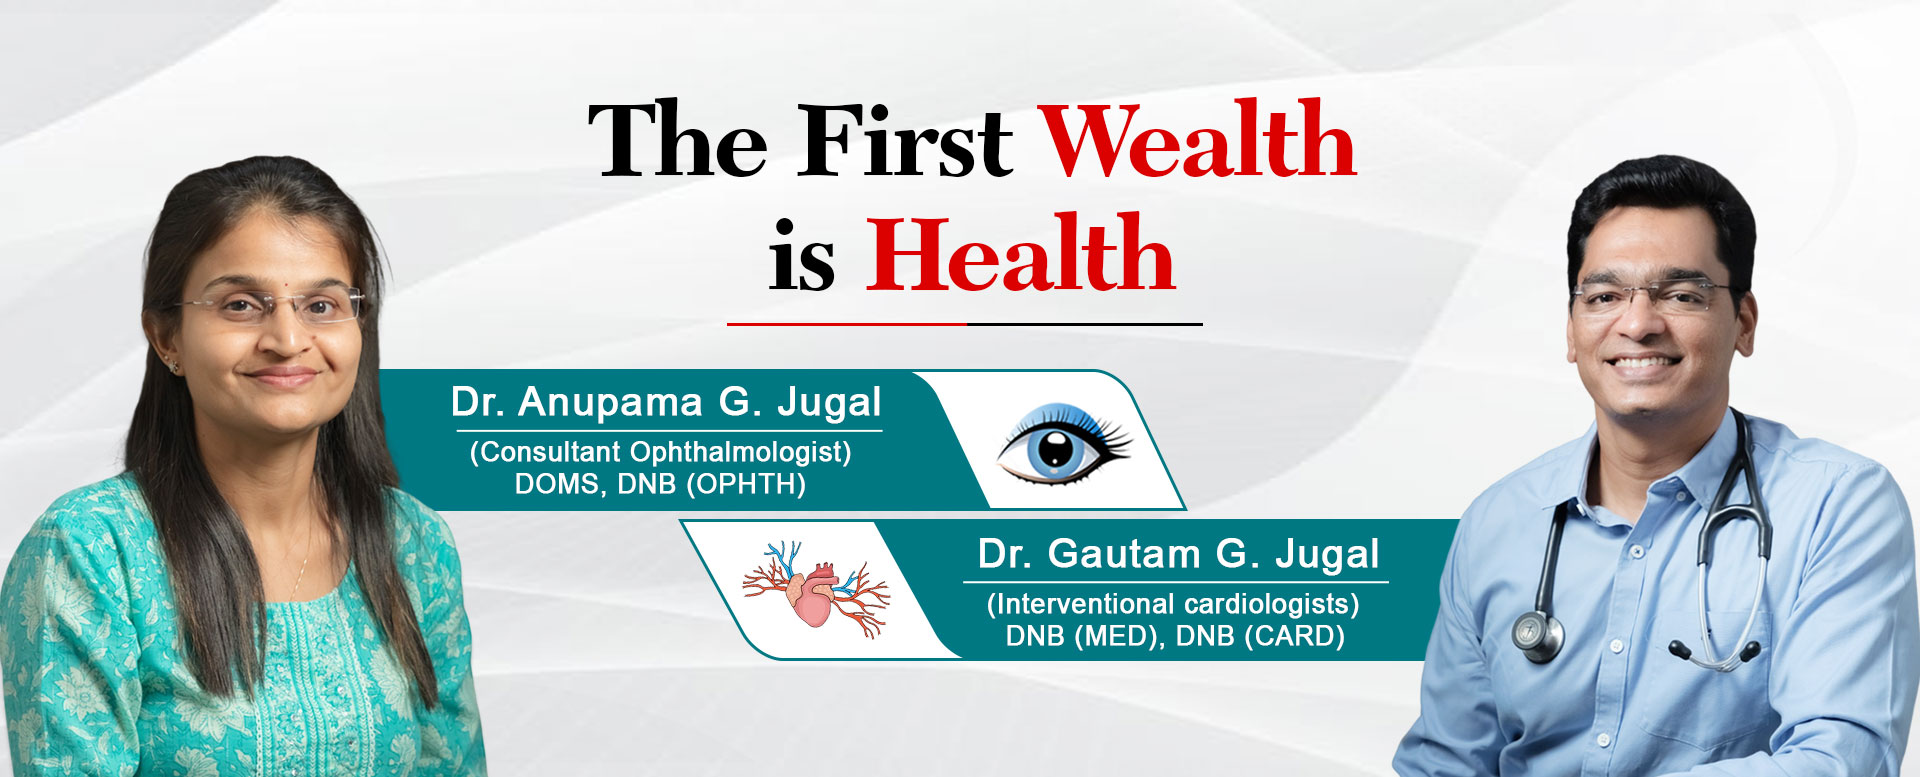 Slider Contain Dr. Anupama Jugal And Dr. Gautam Jugal